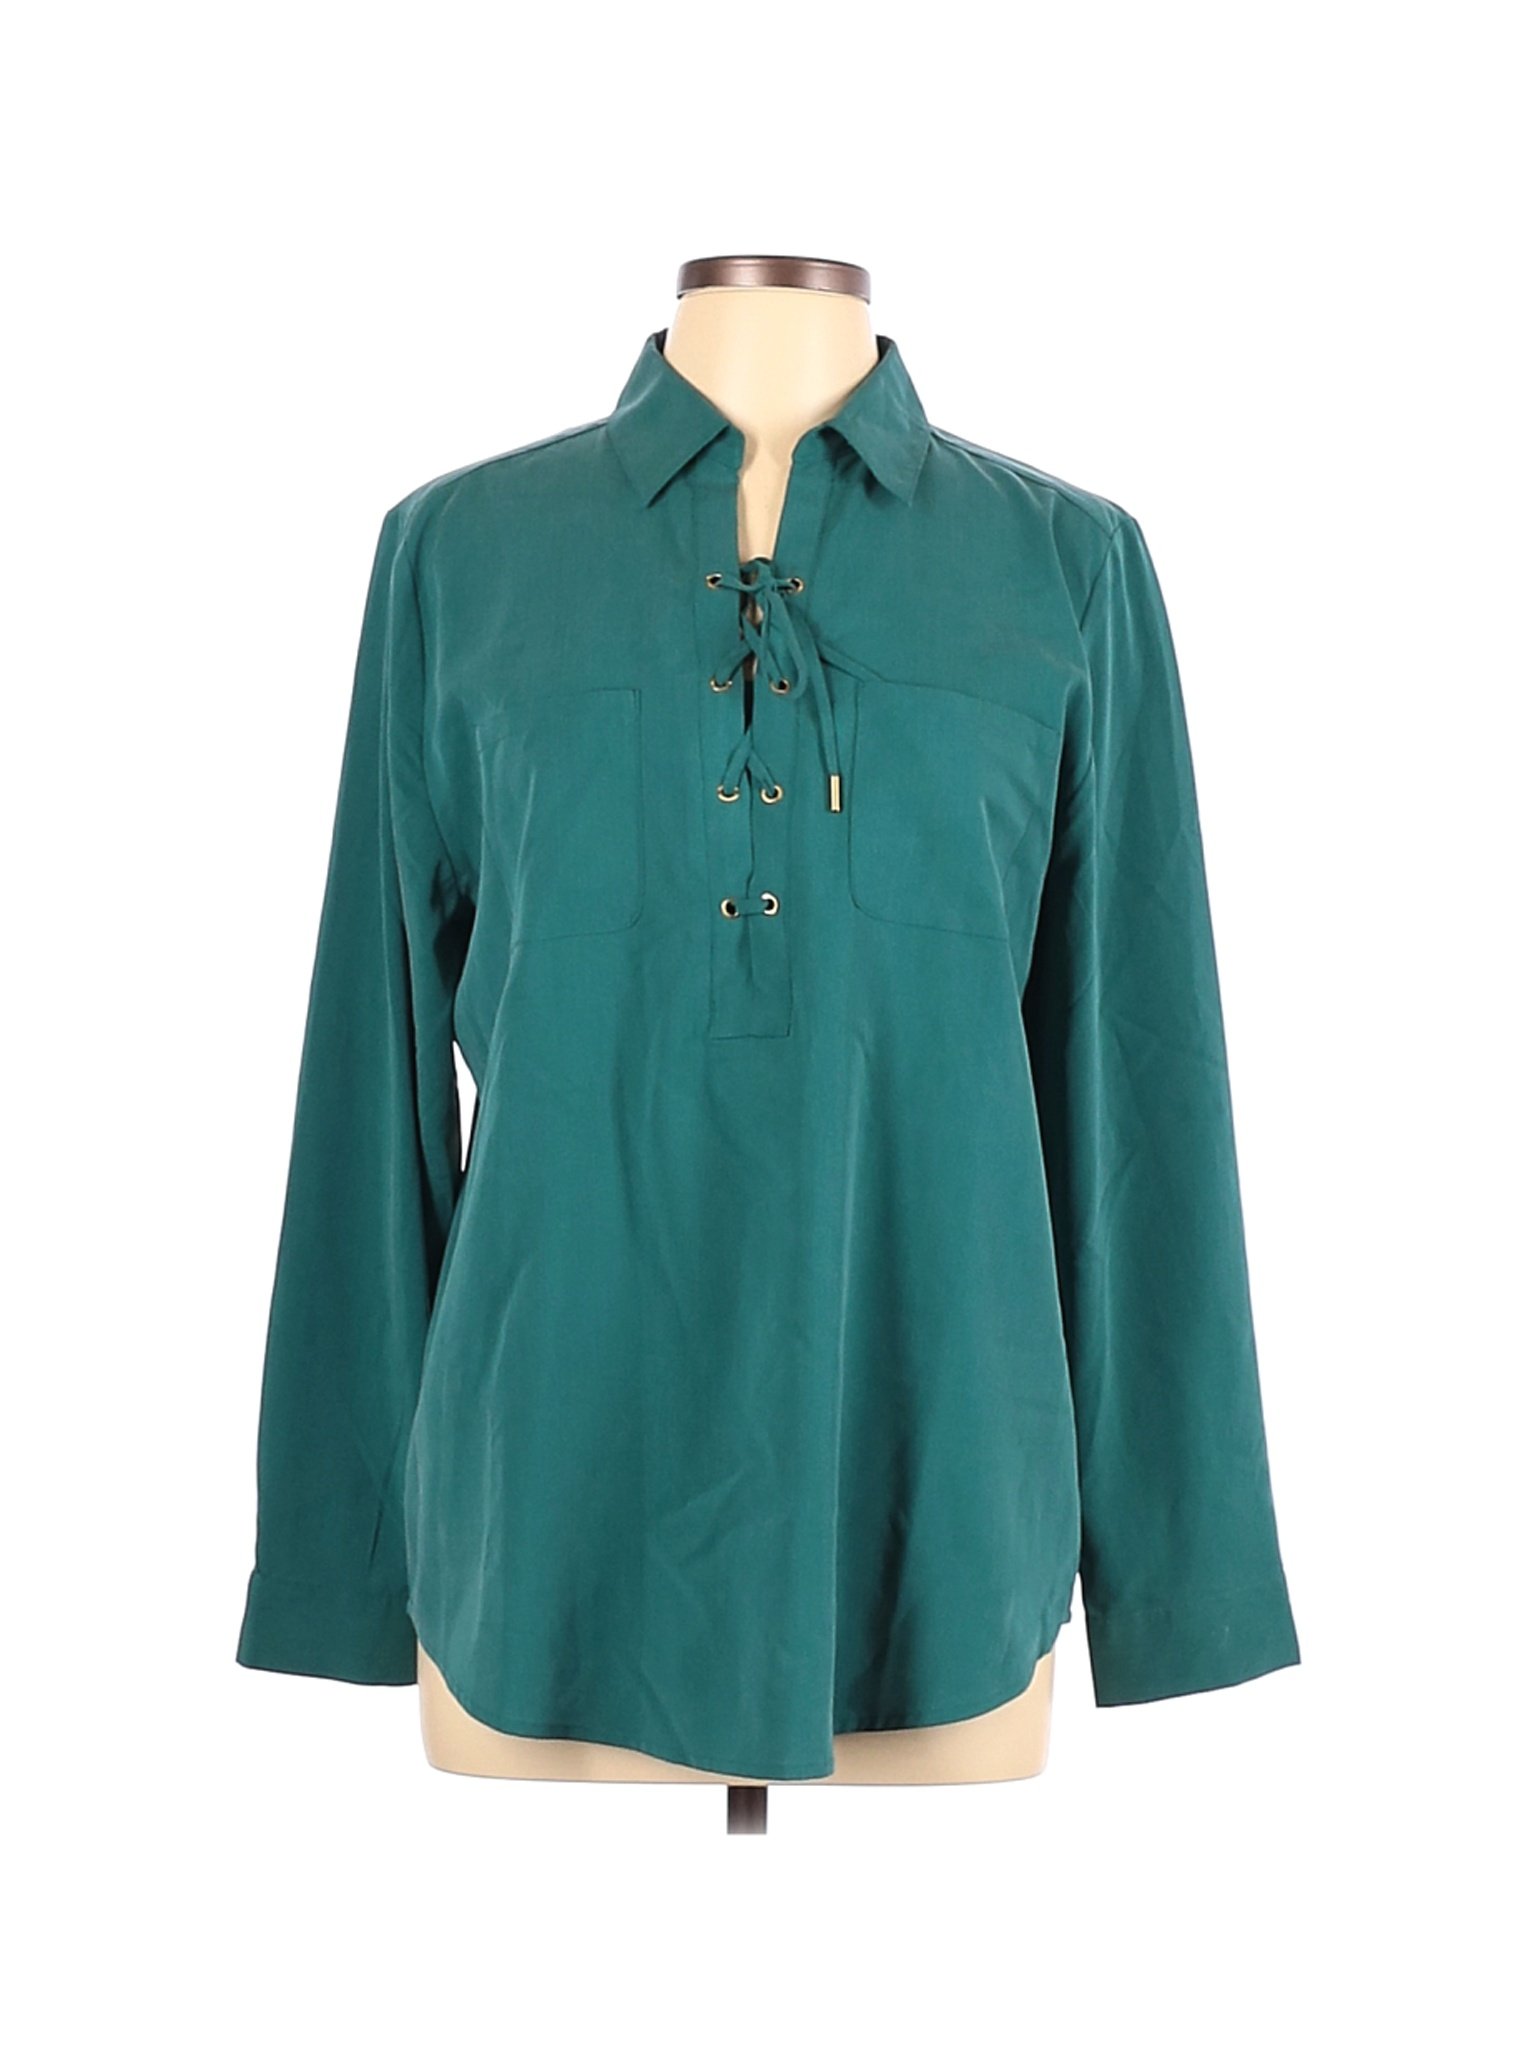 NWT Chico's Women Green Long Sleeve Blouse L | eBay